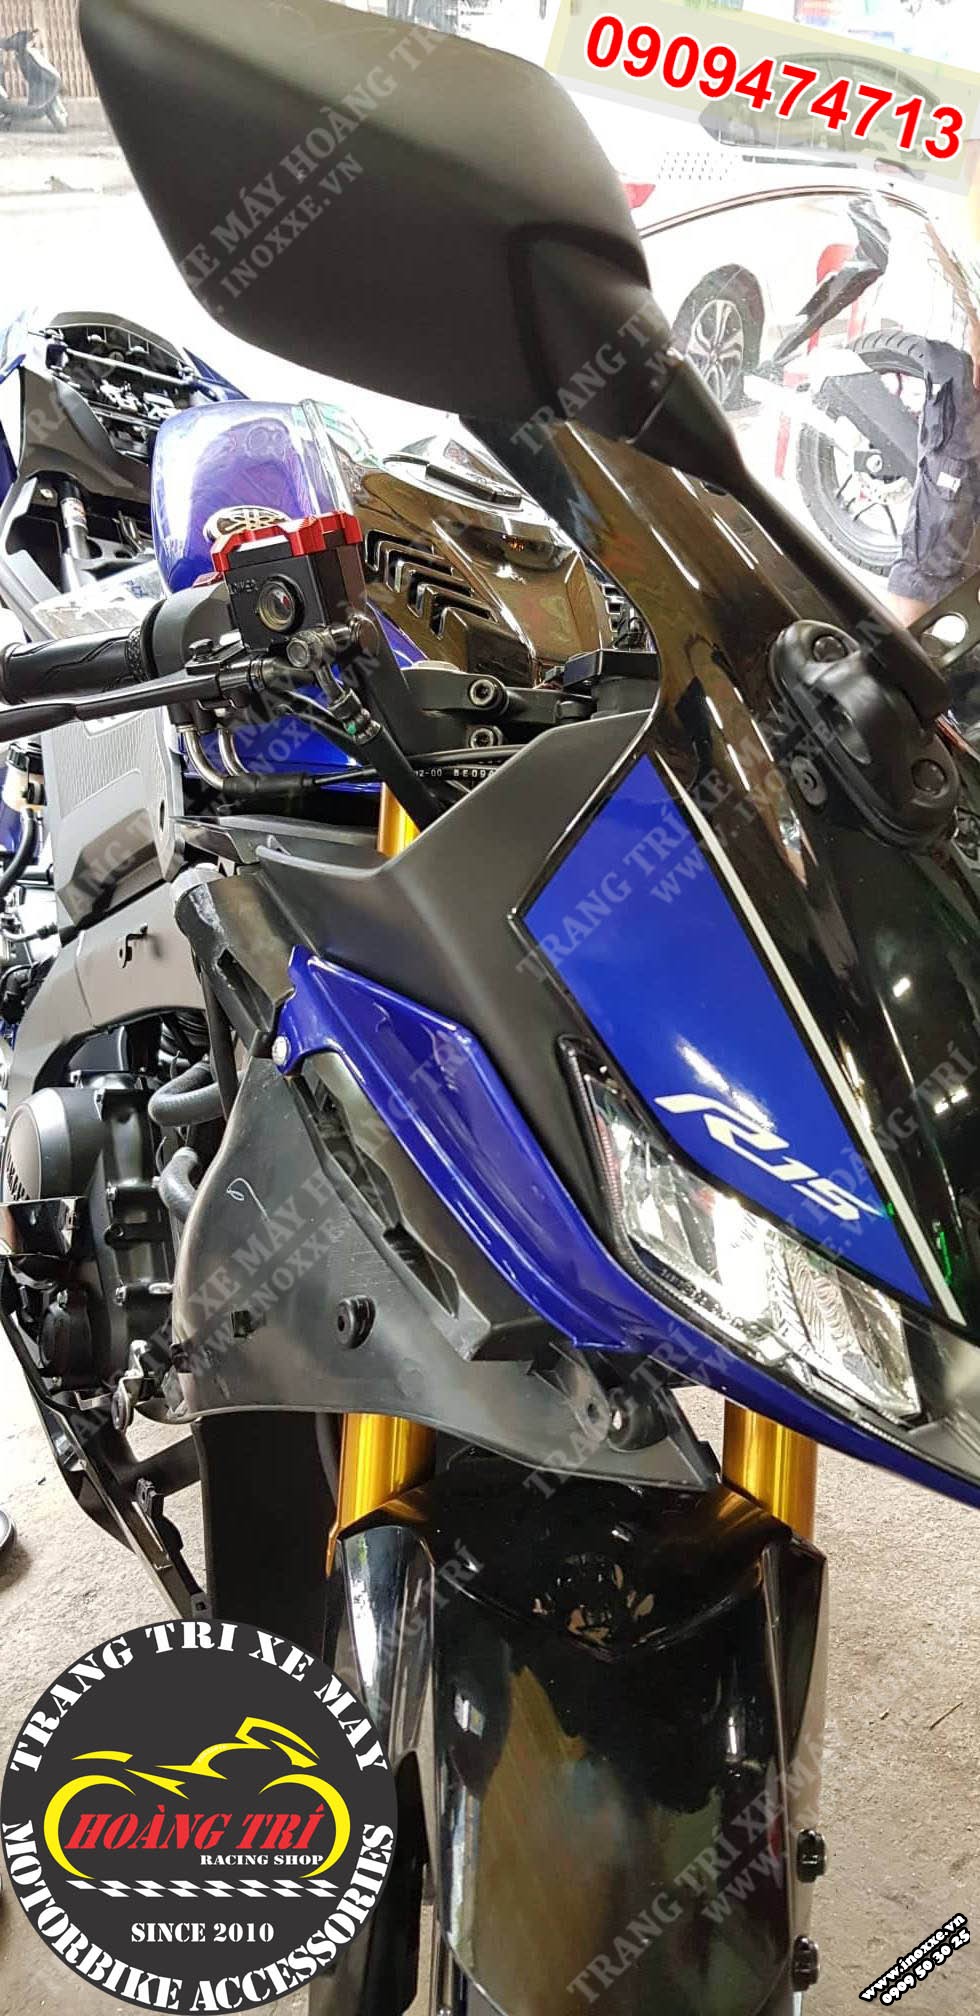 Nắp dầu Speedy lắp đặt cho Yamaha R15